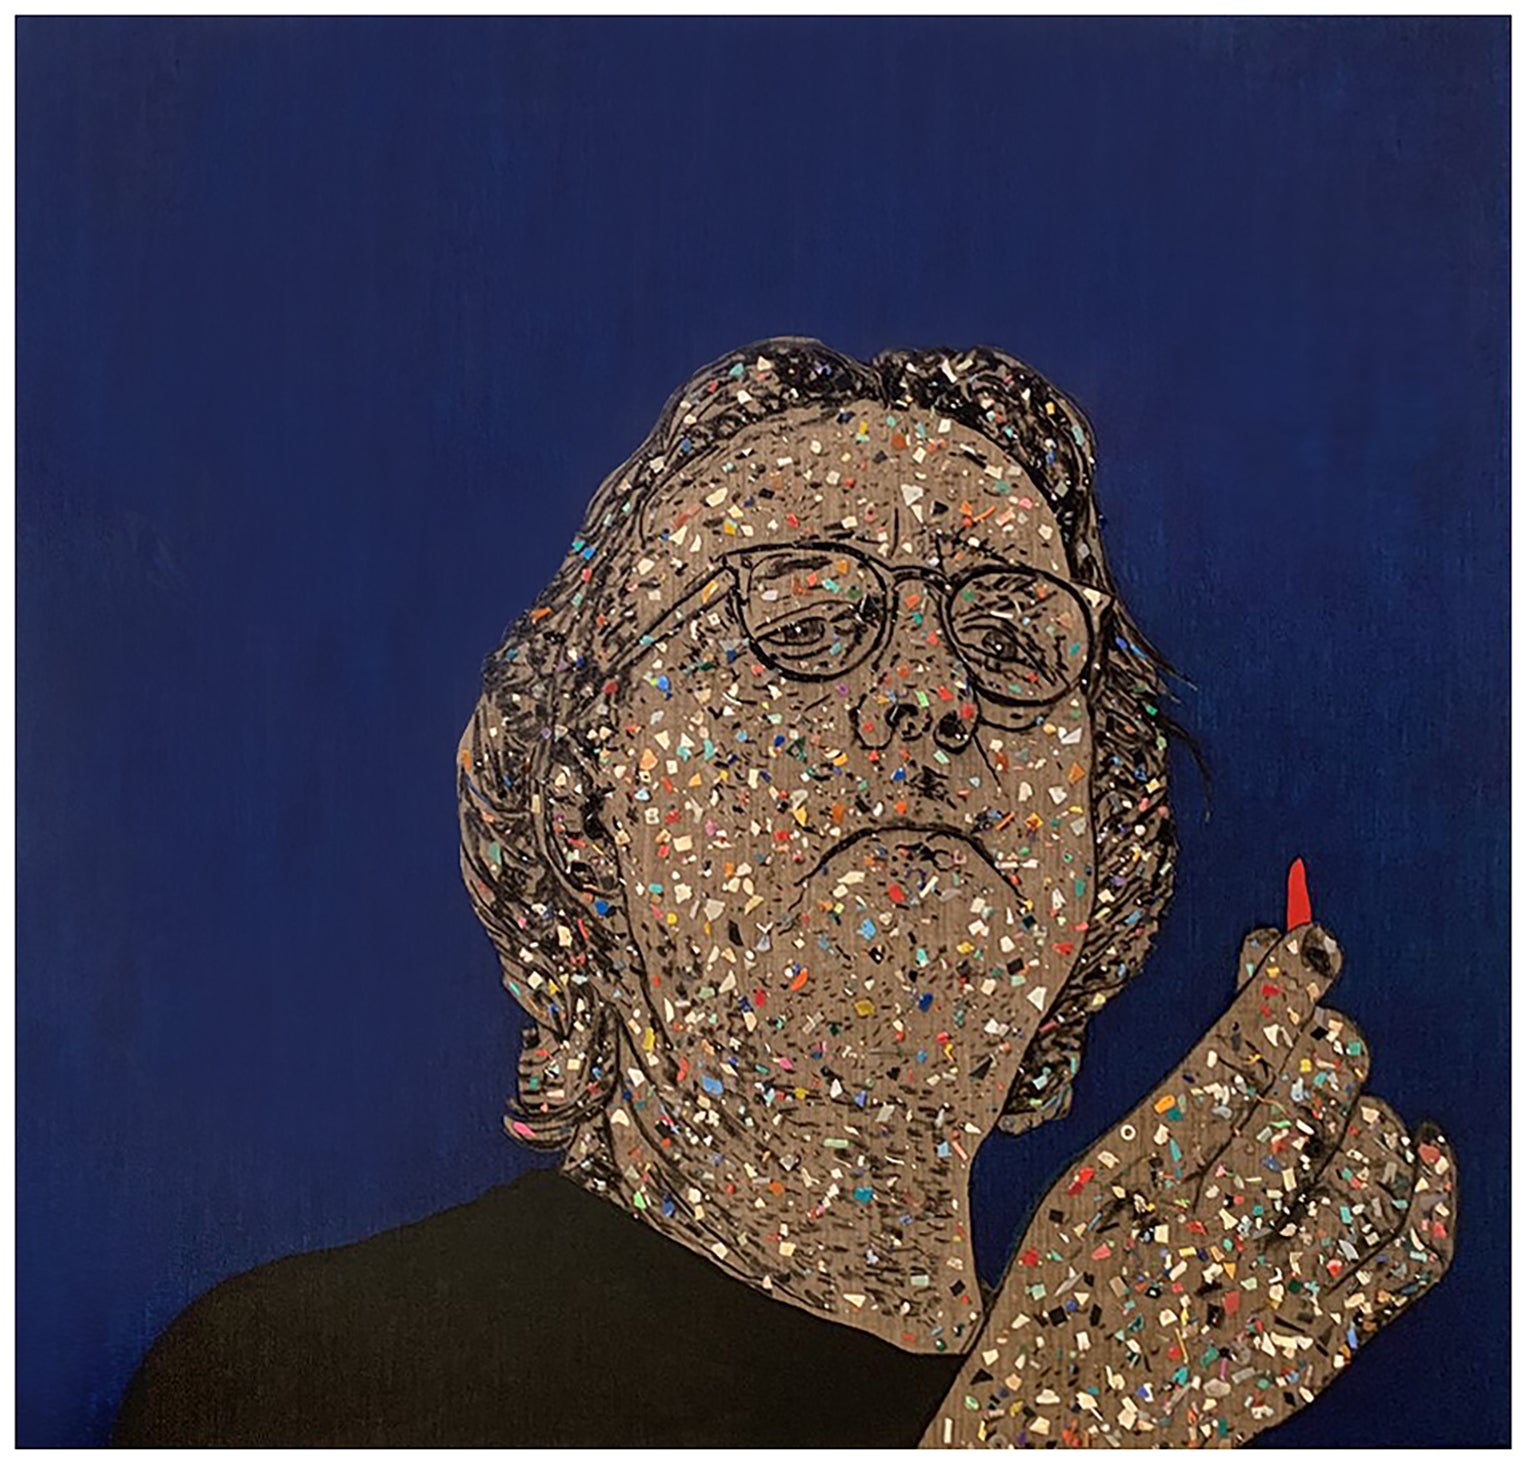 Dahlsen, John. 2020, Self Portrait With Micro Plastics.